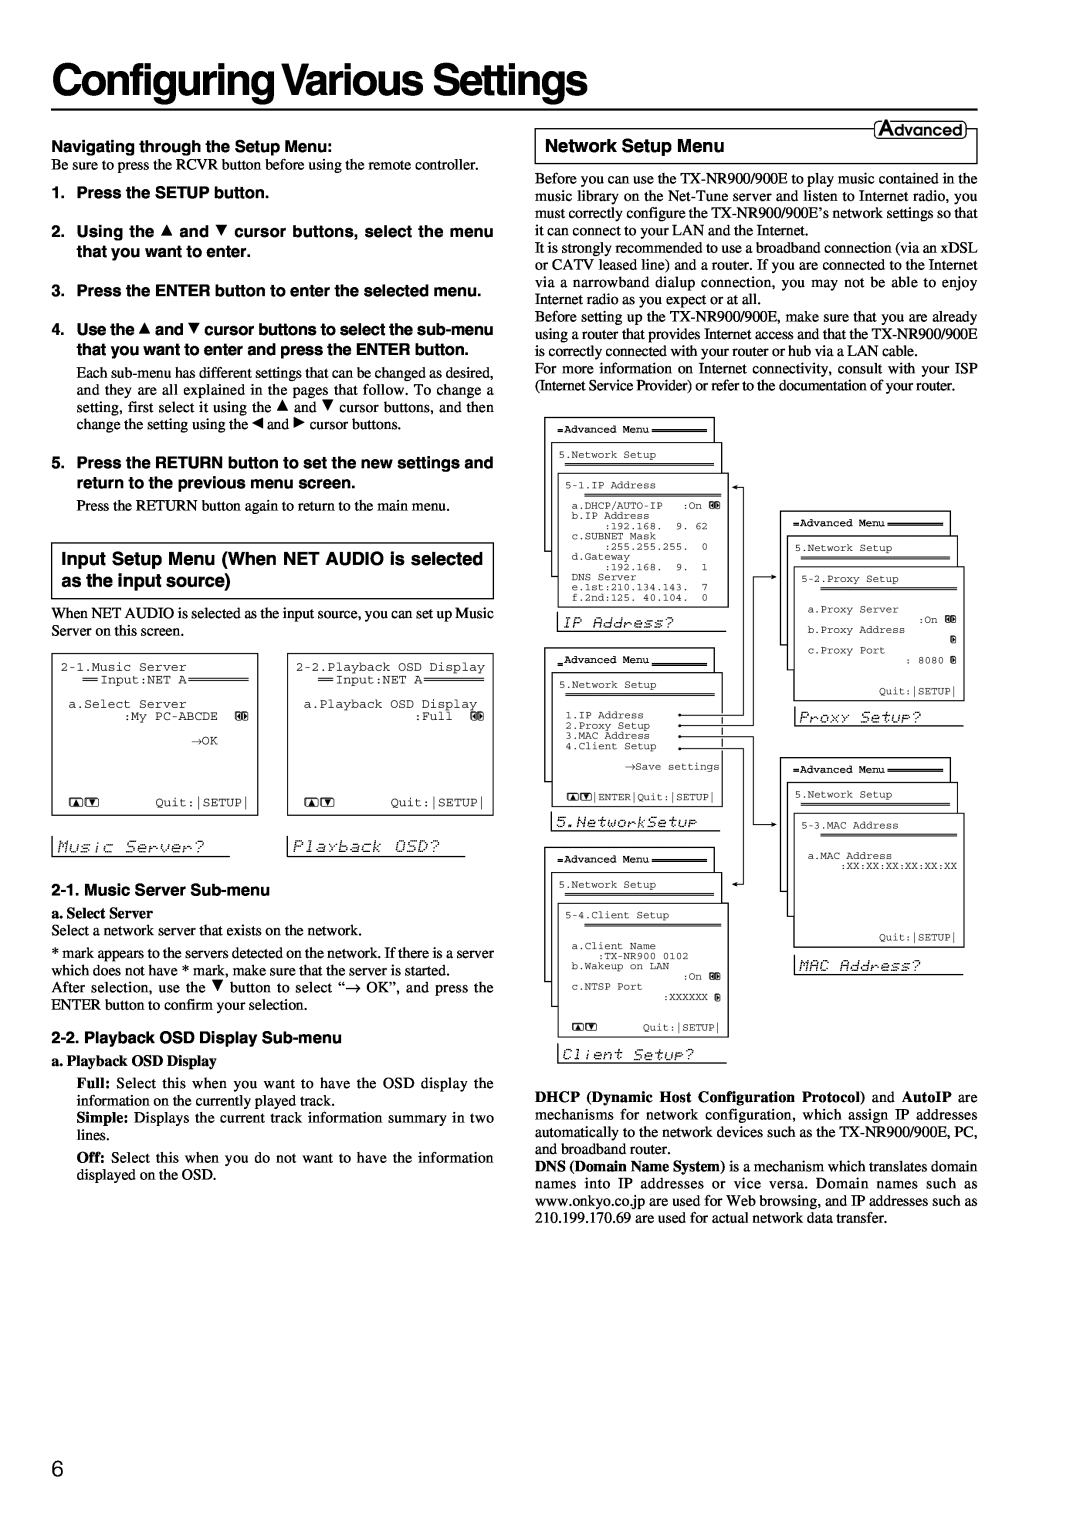 Onkyo TX-NR900E manual Configuring Various Settings, Network Setup Menu 